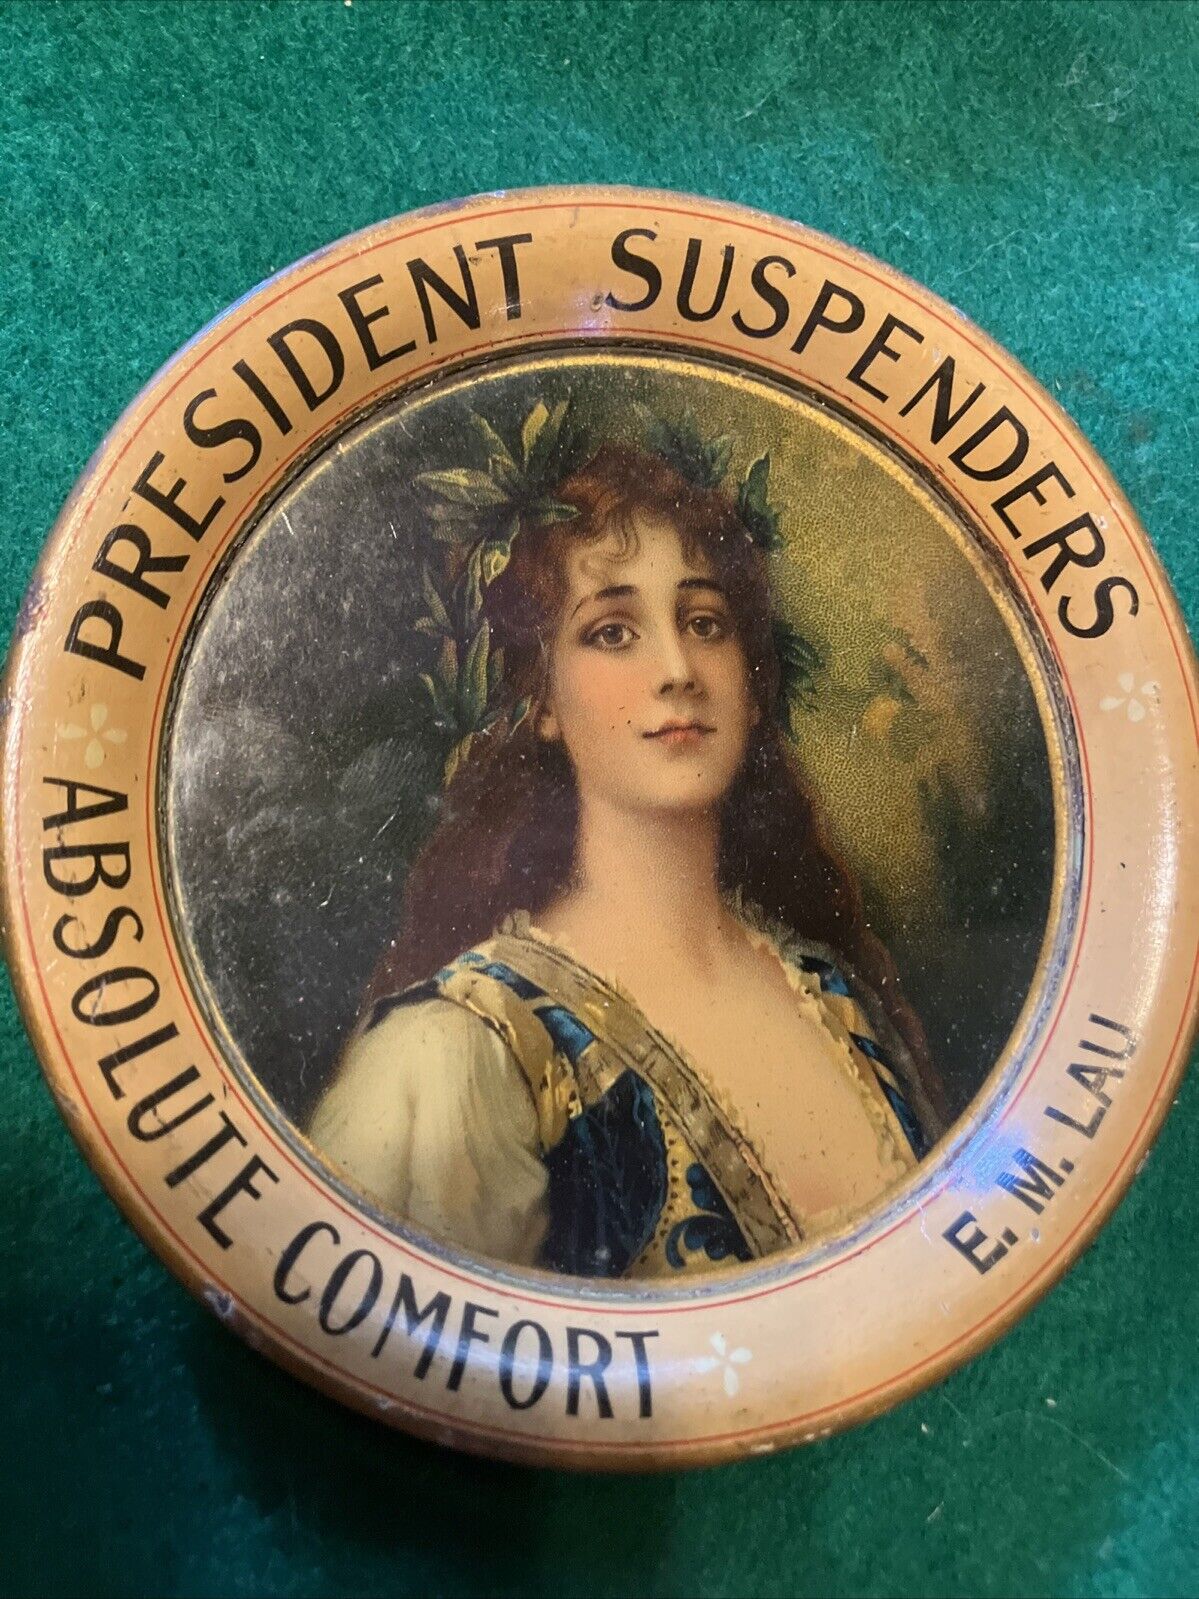 Antique 1900s President Suspenders Ad Tin Litho Tip Tray 4.25” John Smith VTG